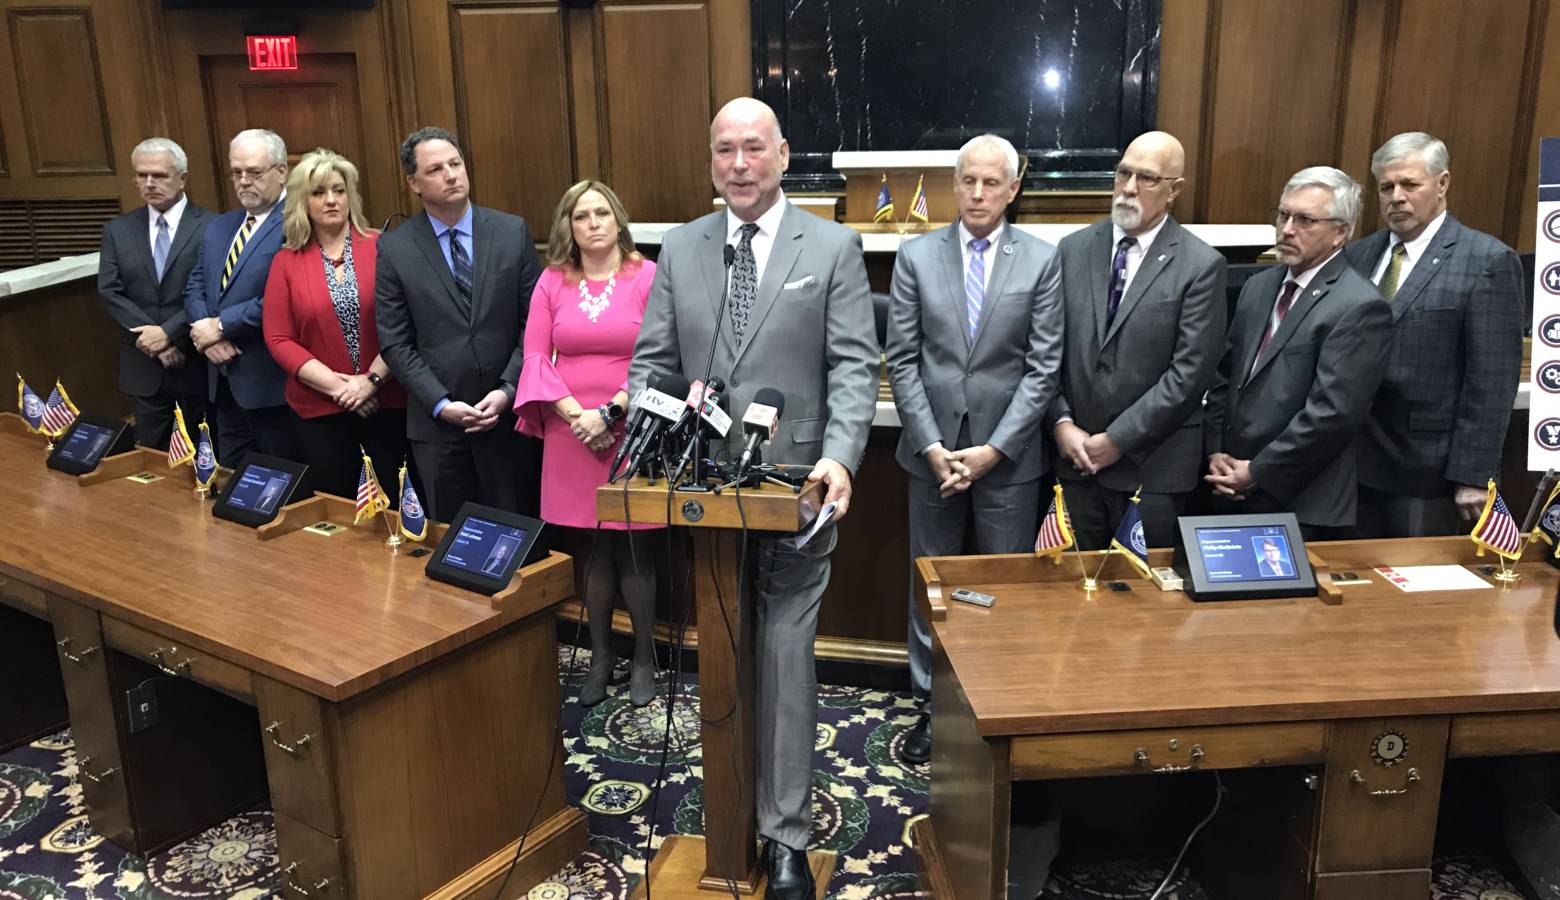 Members of the Indiana House Republican Caucus present their 2019 legislative agenda. (Steve Burns/WTIU)